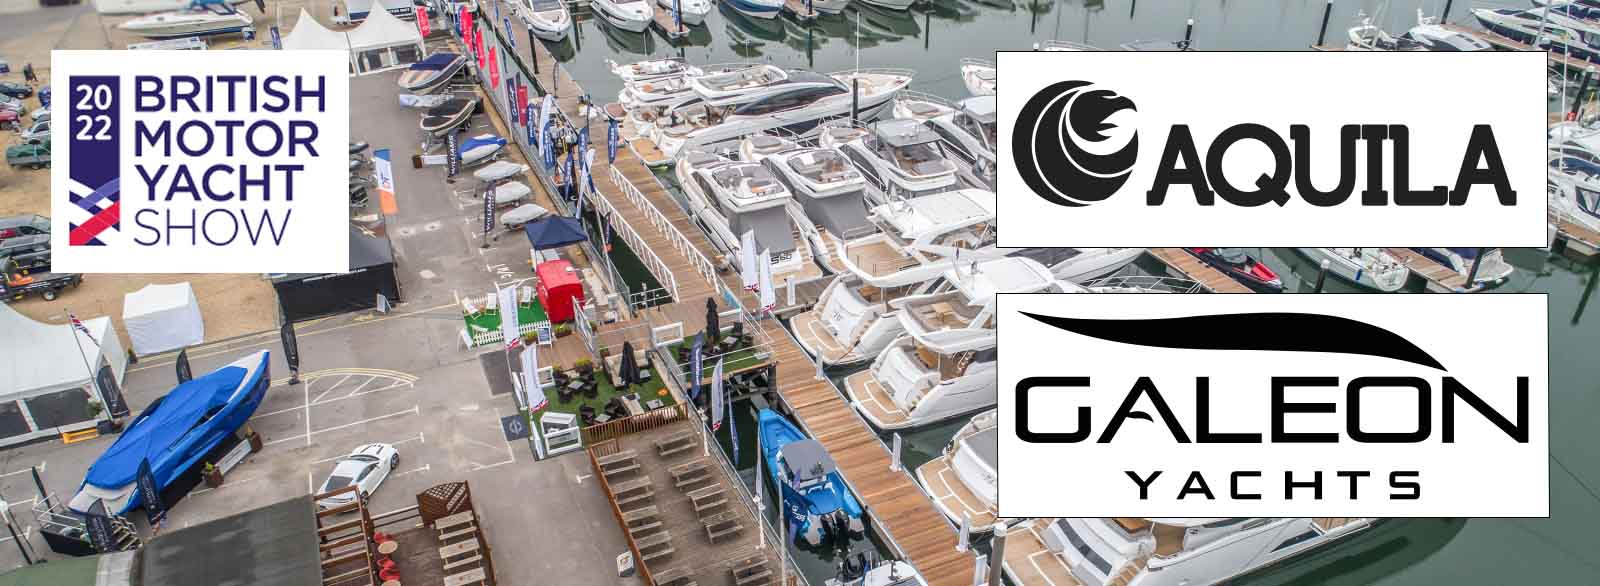 Galeon at the South Coast Boat Show 2022